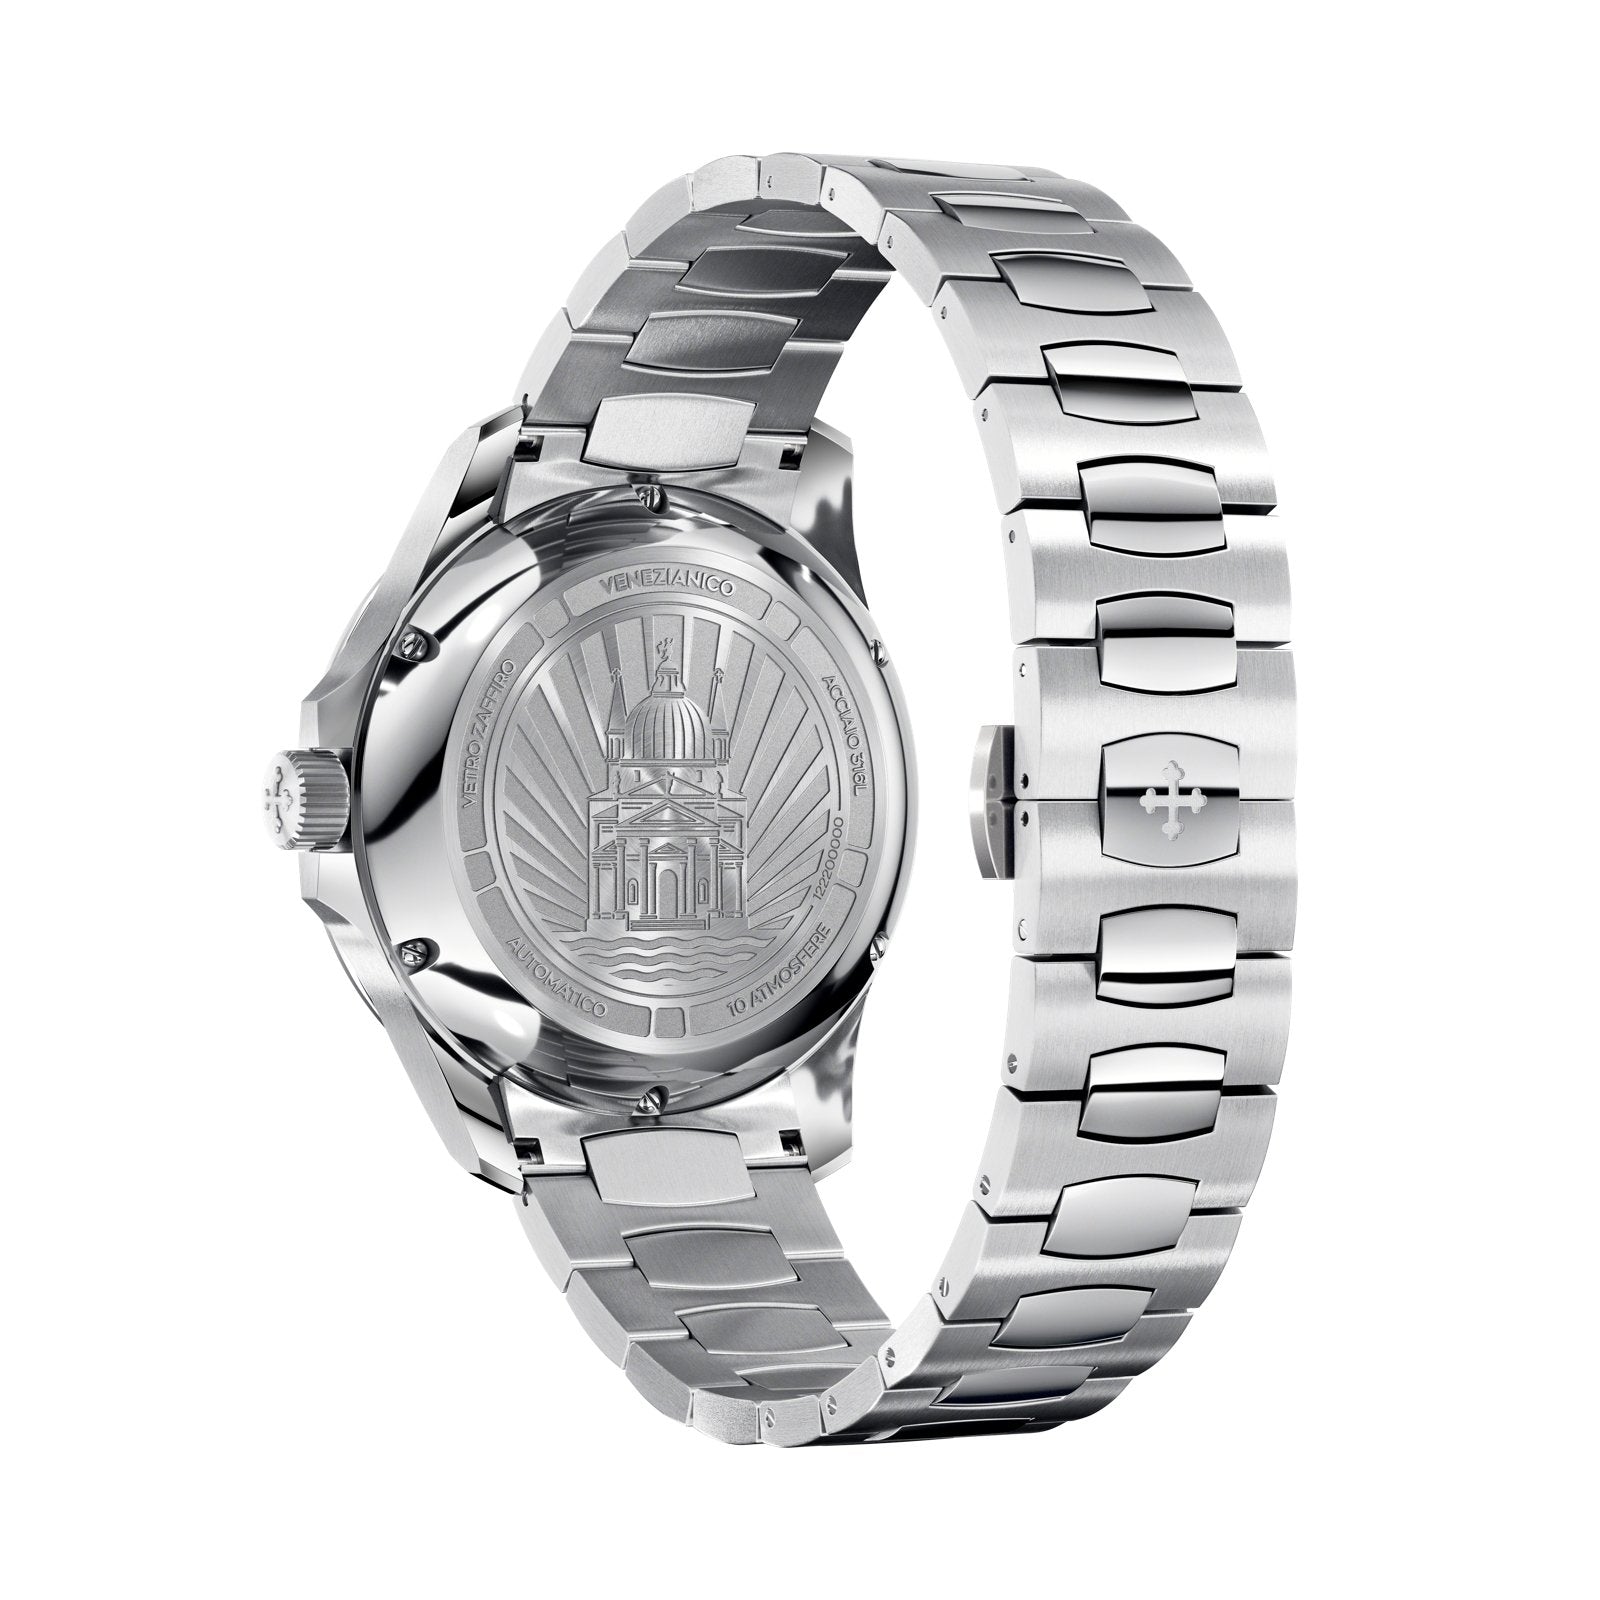 Venezianico Automatic Watch Redentore 40 Black Steel 1221504C - Watches & Crystals